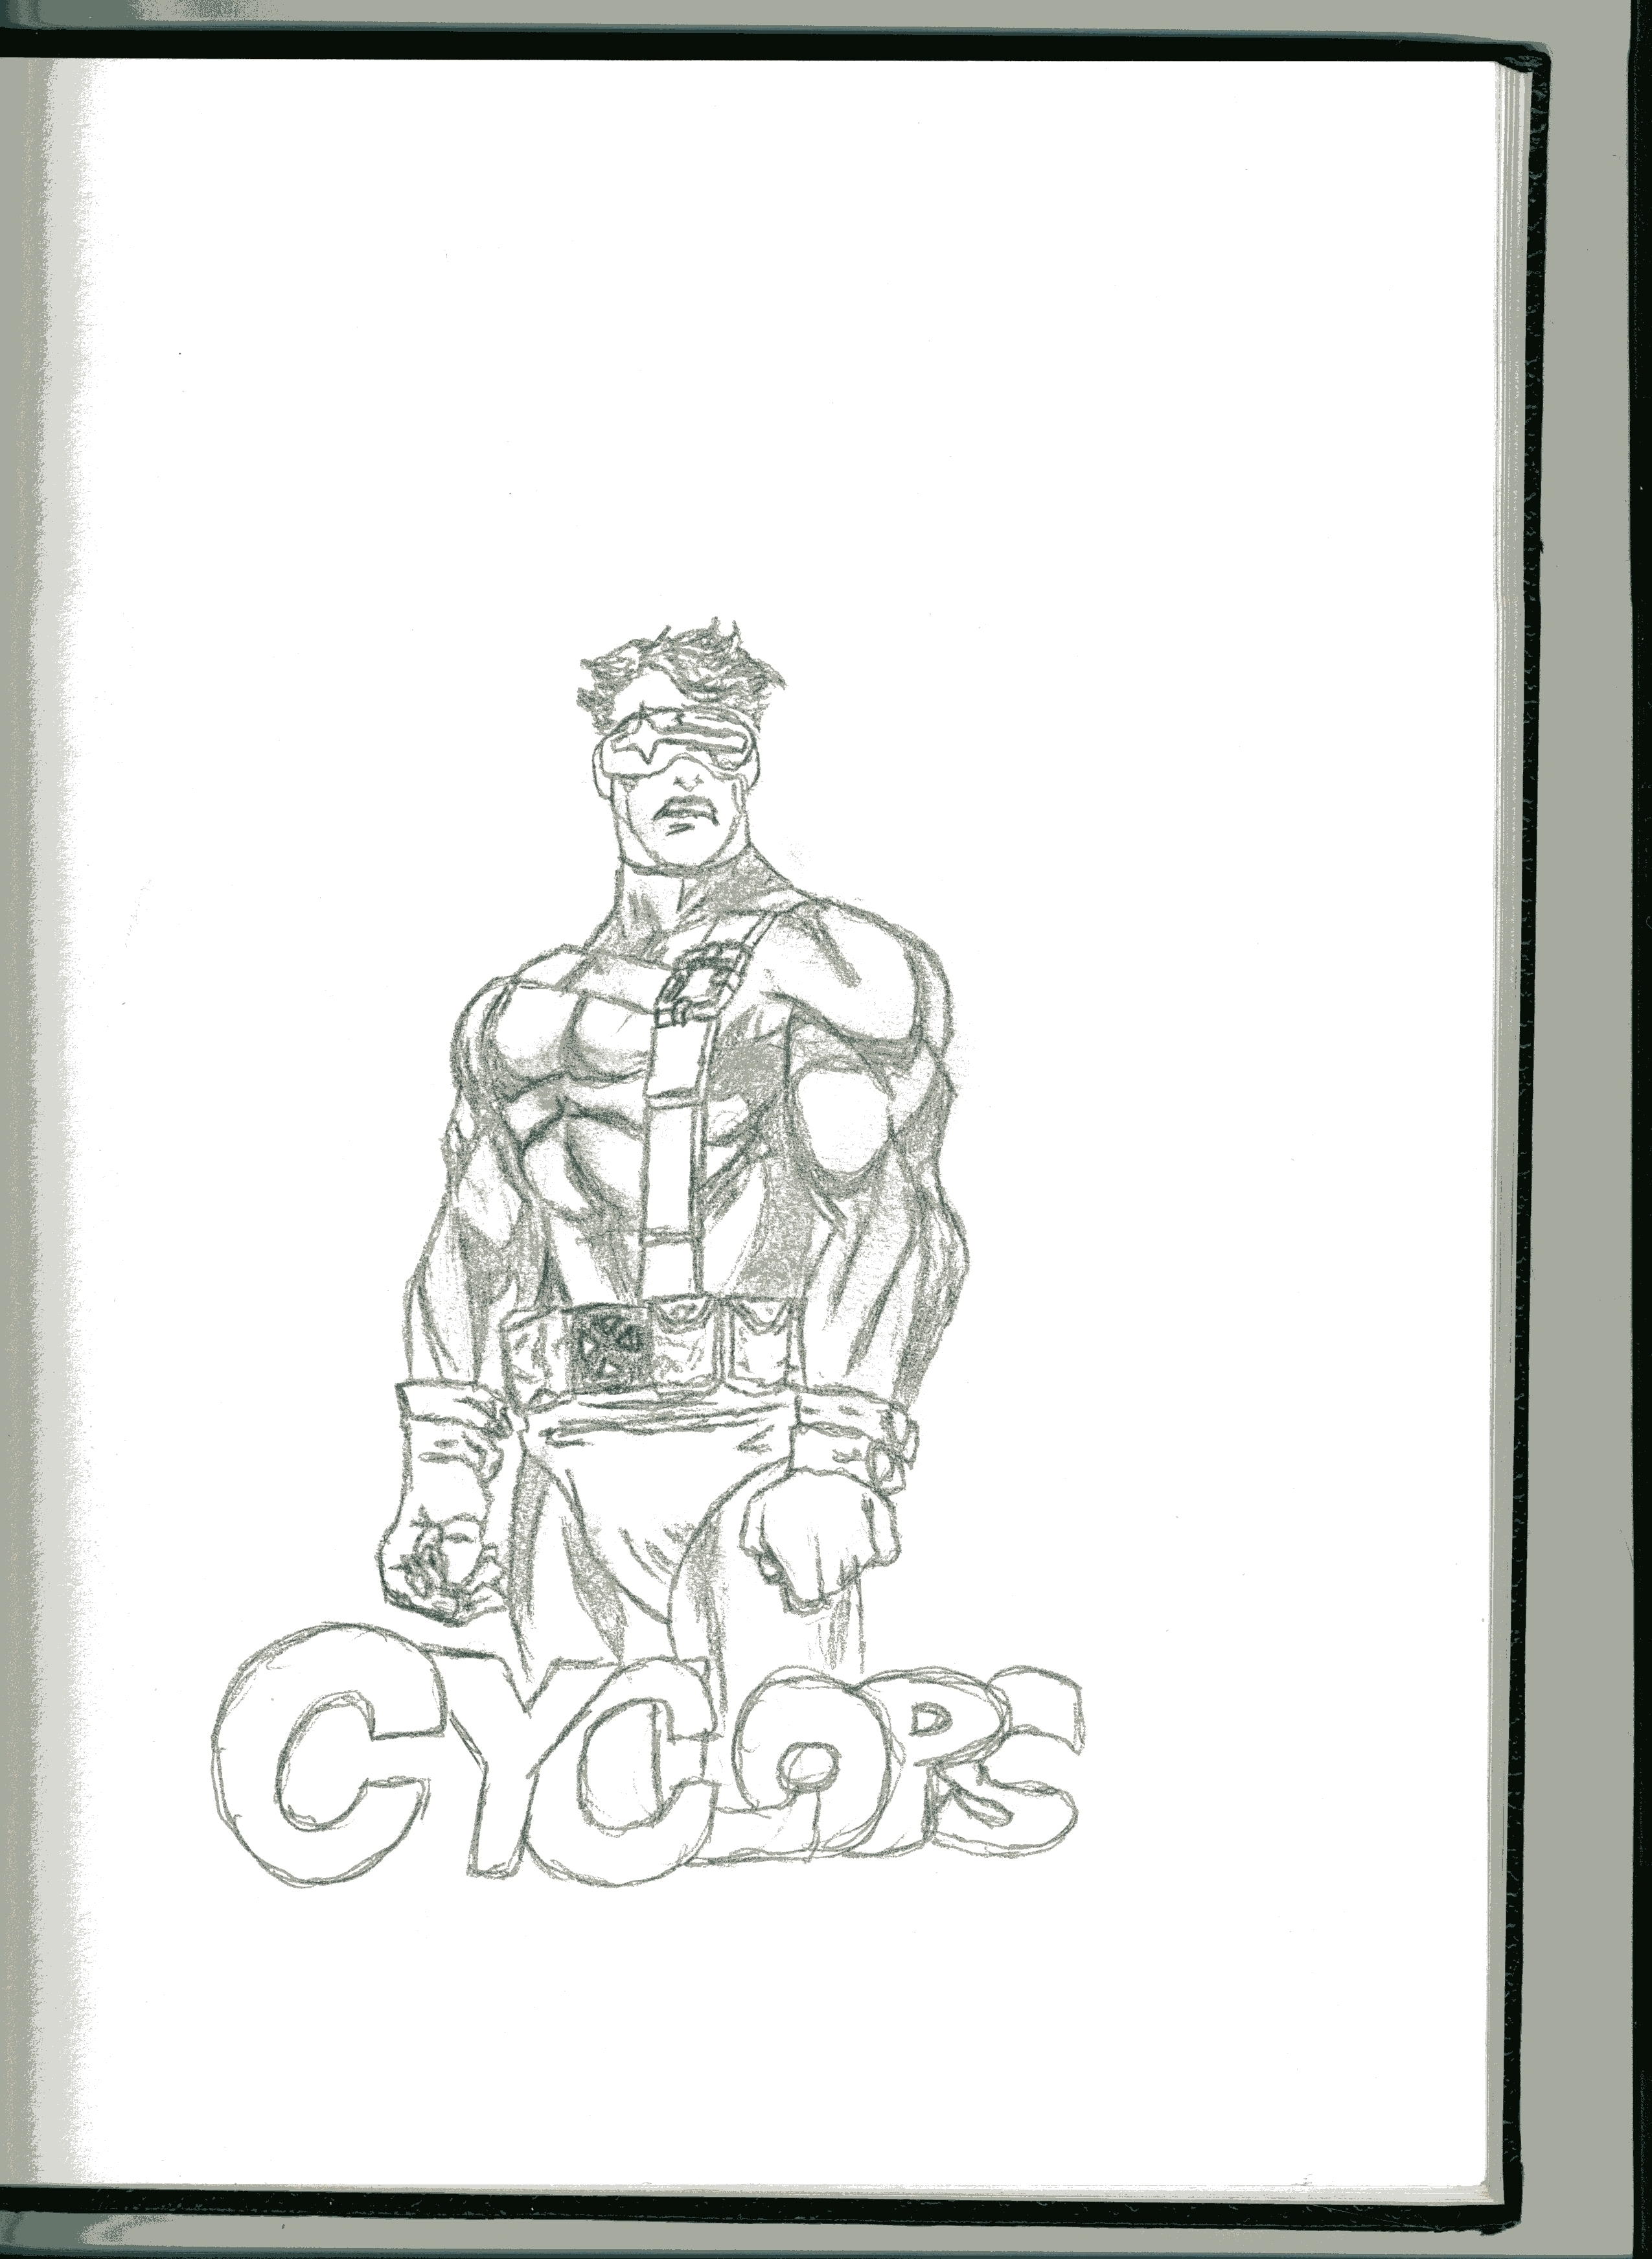 Cyclops by gr81muffers